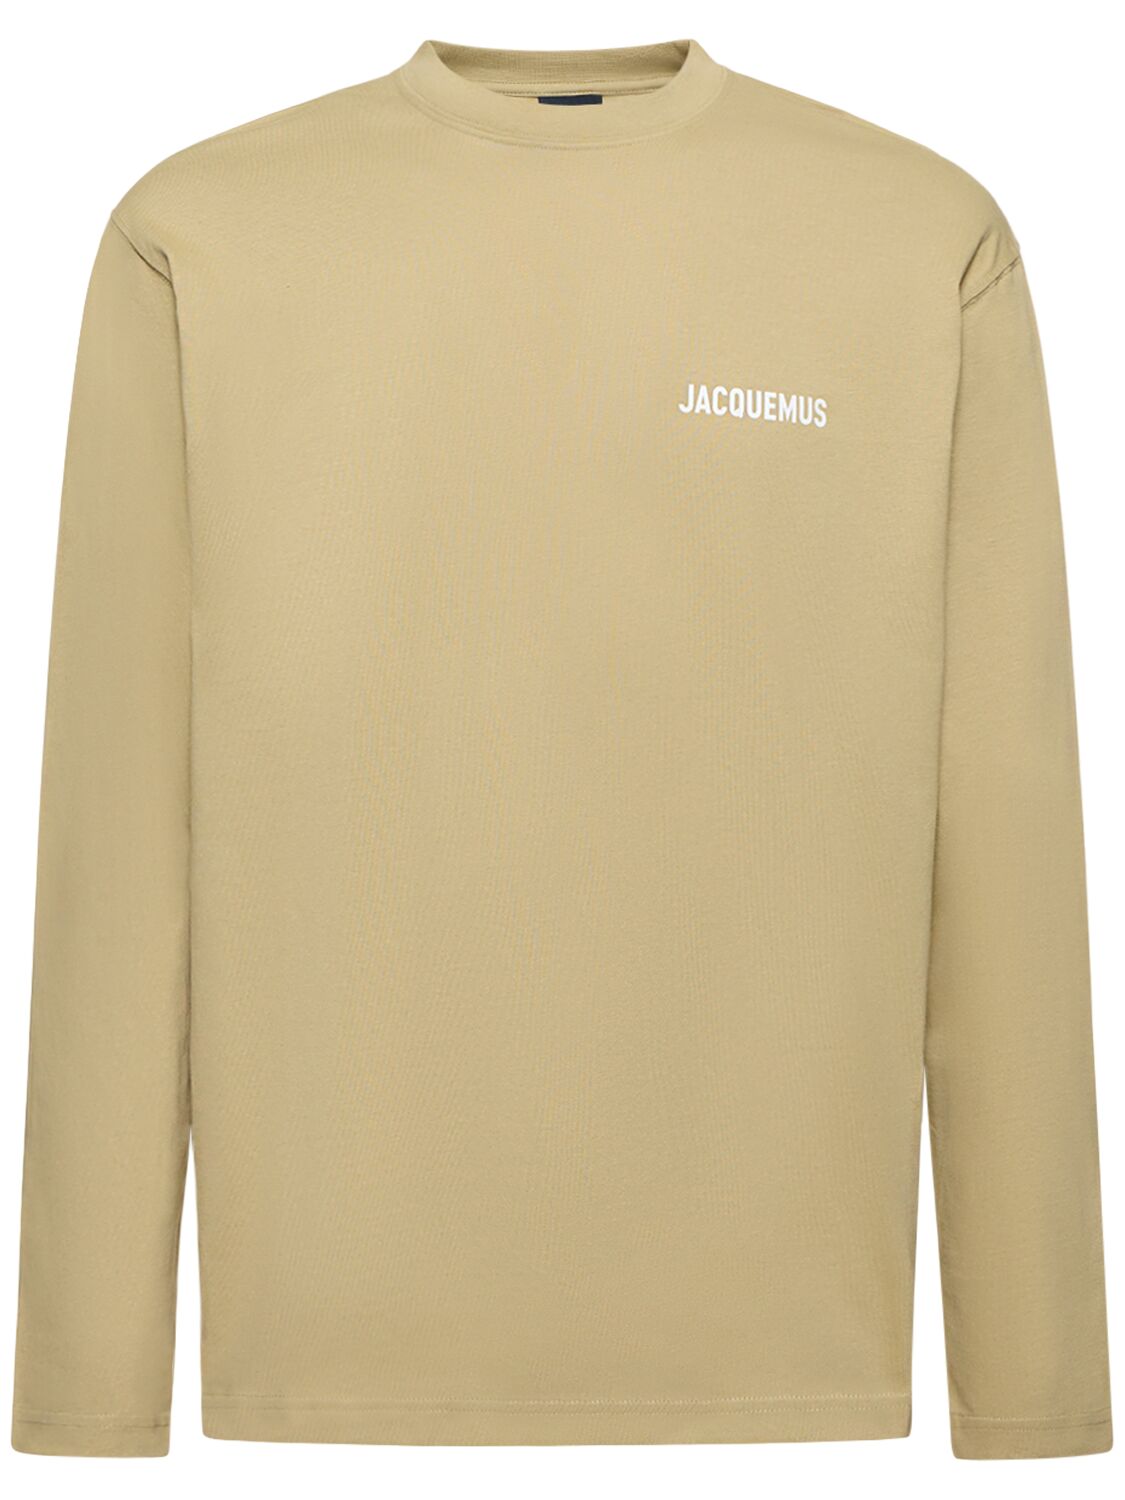 Jacquemus Le Tshirt Cotton Long Sleeve T-shirt In Light Khaki